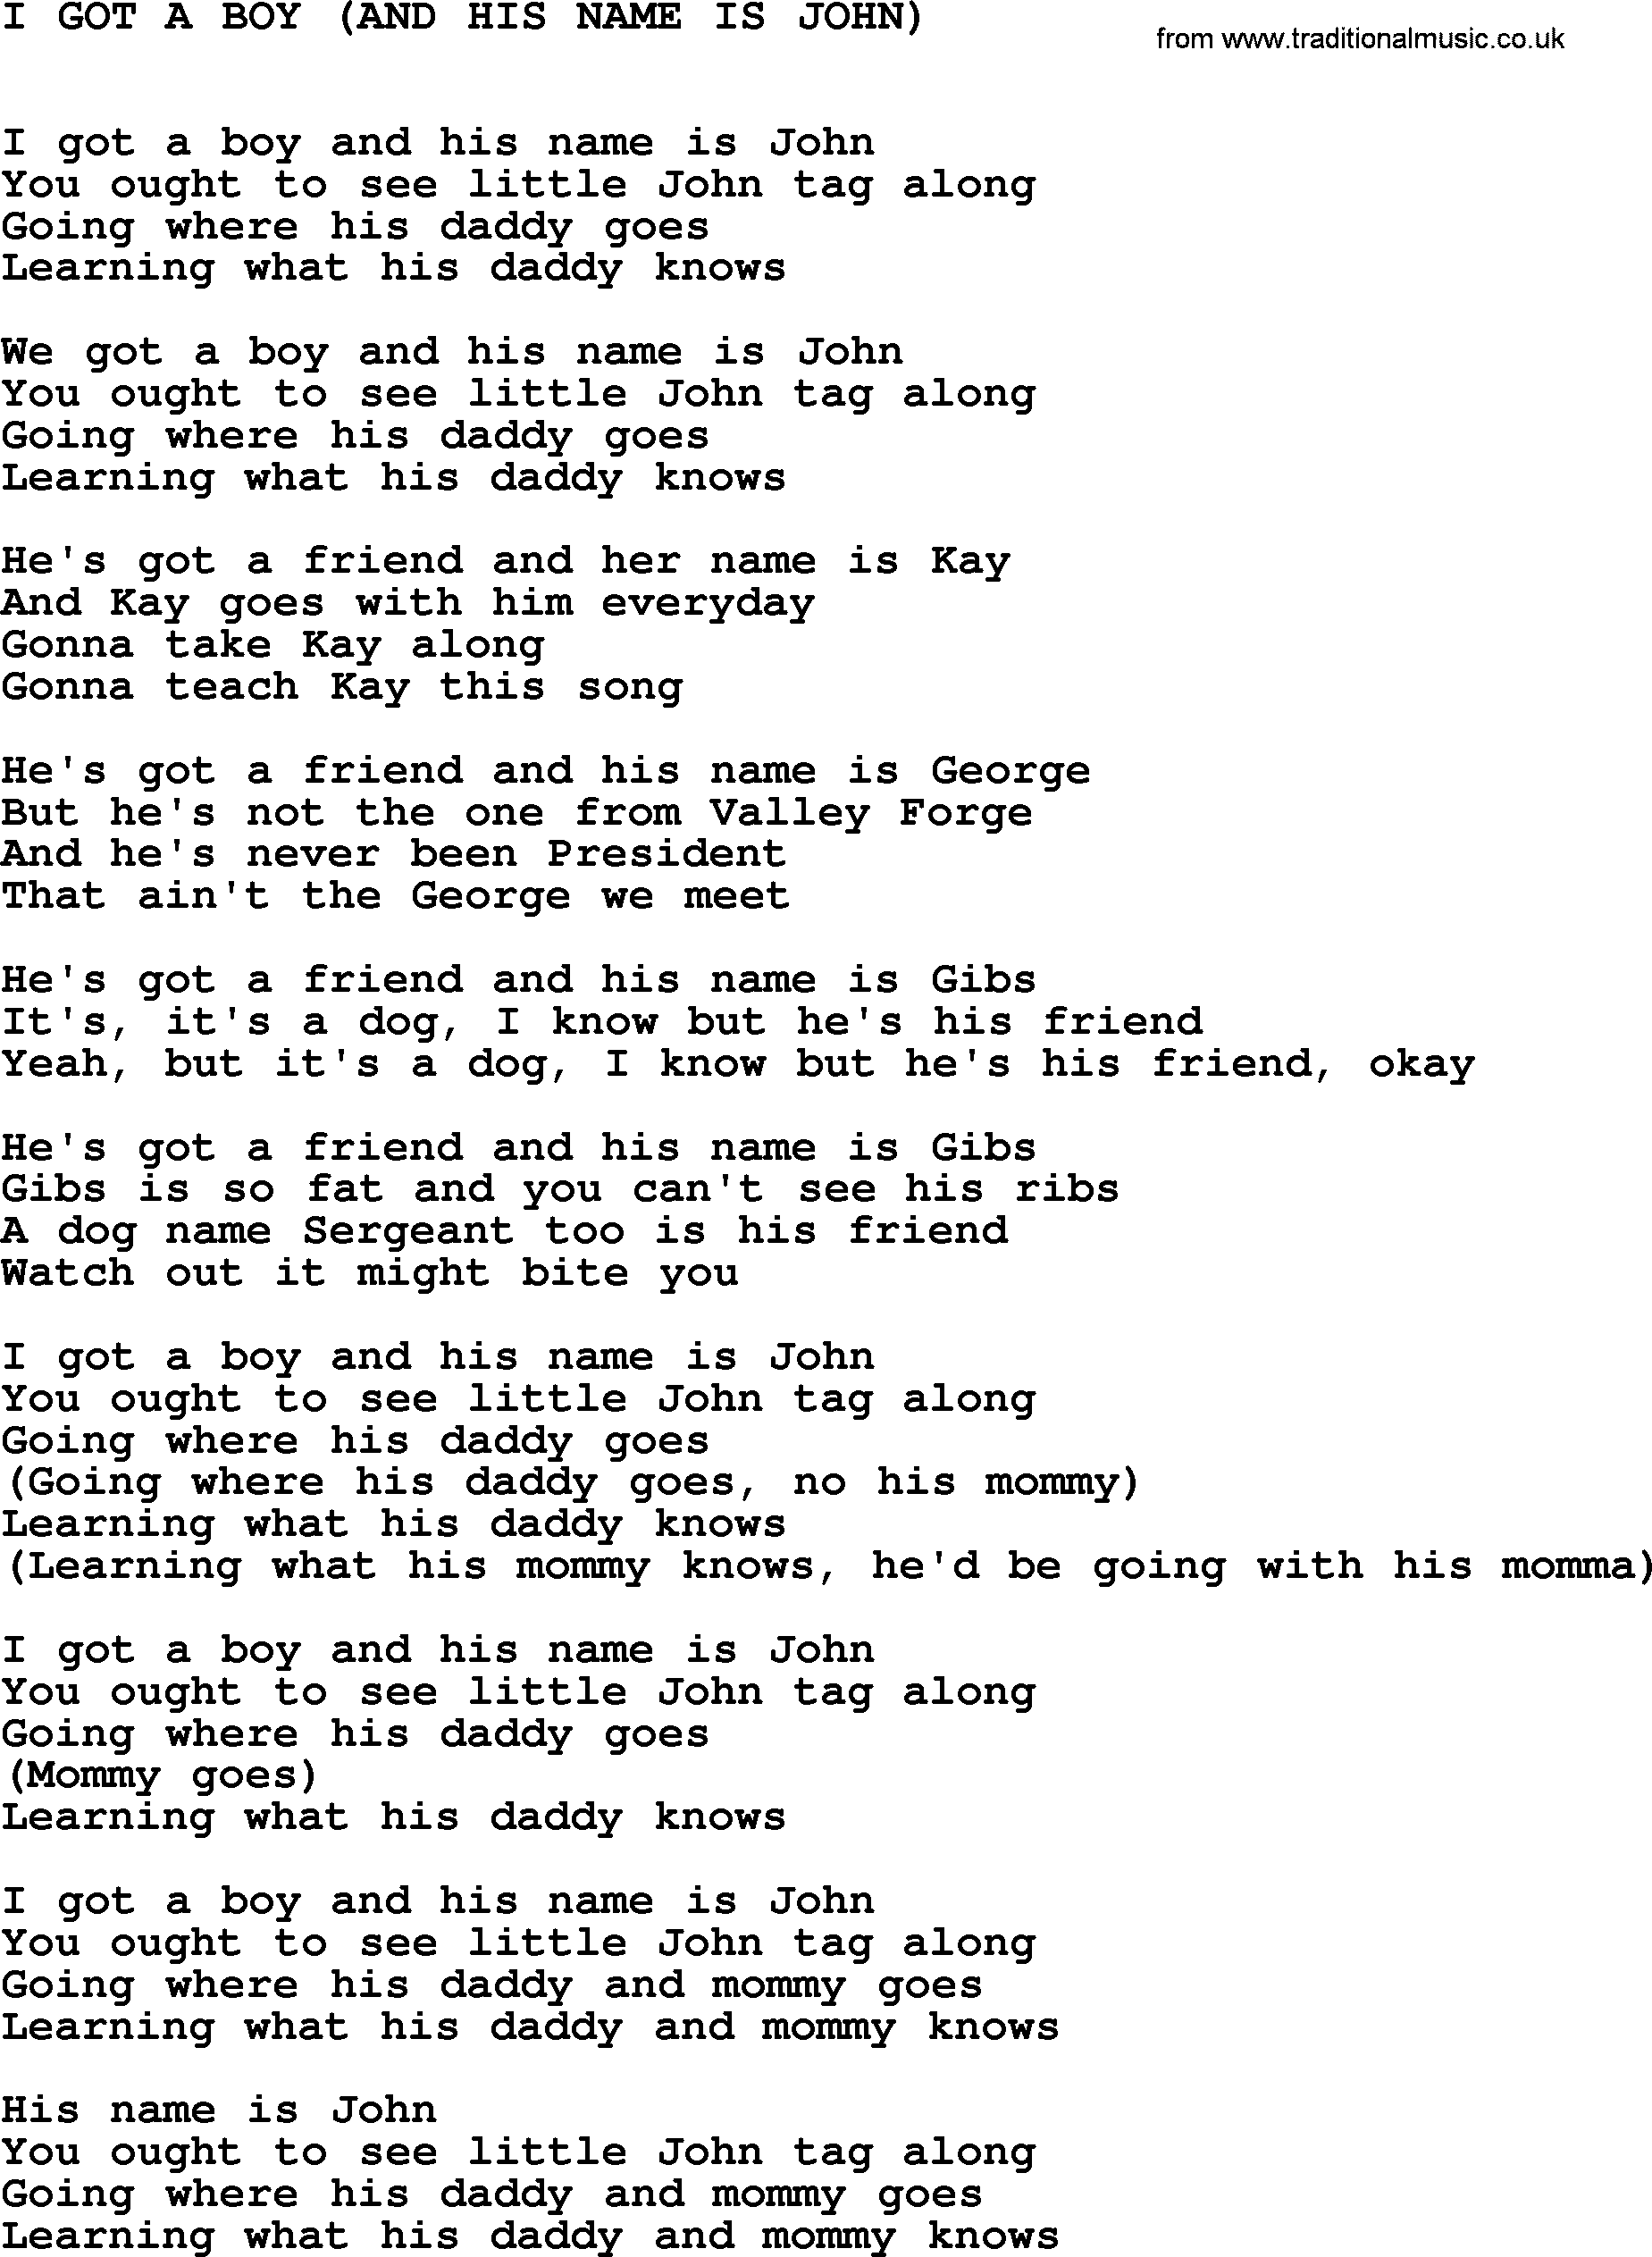 Johnny Cash song I Got A Boy(And His Name Is John).txt lyrics